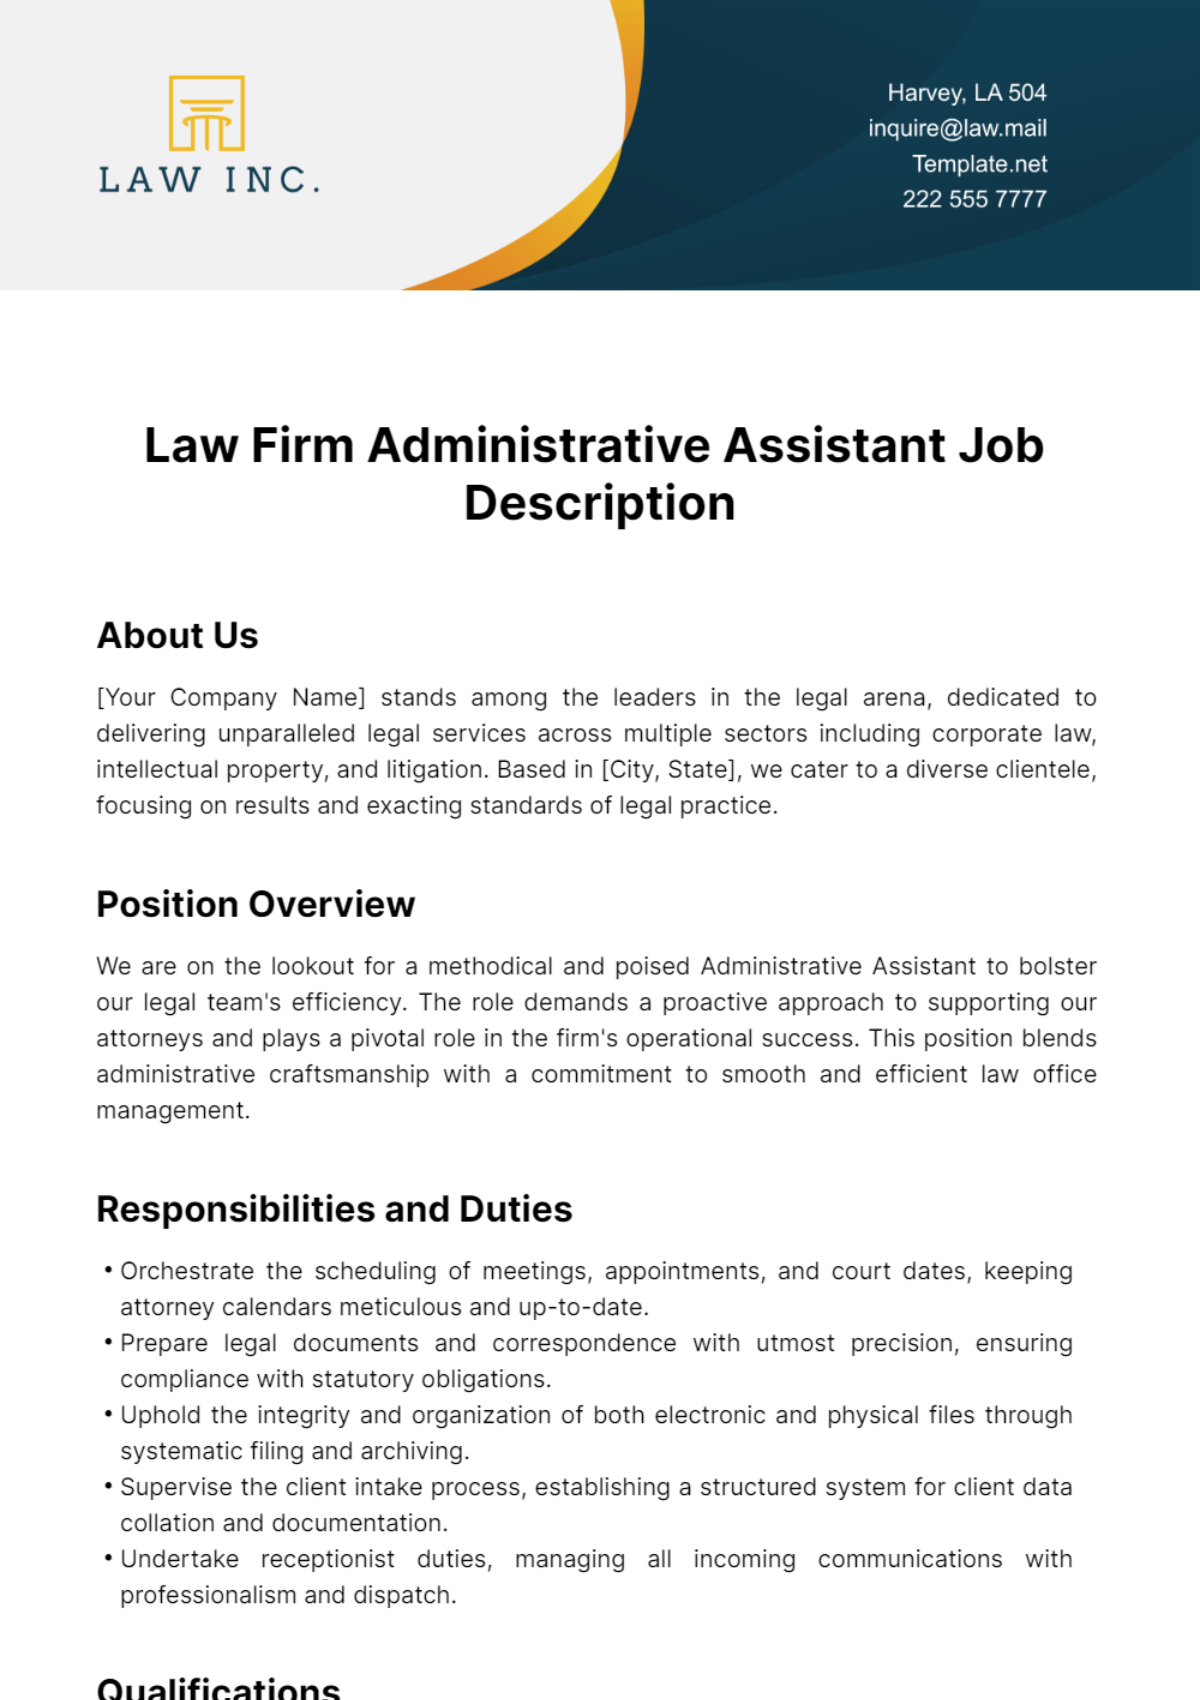 Law Firm Administrative Assistant Job Description Template